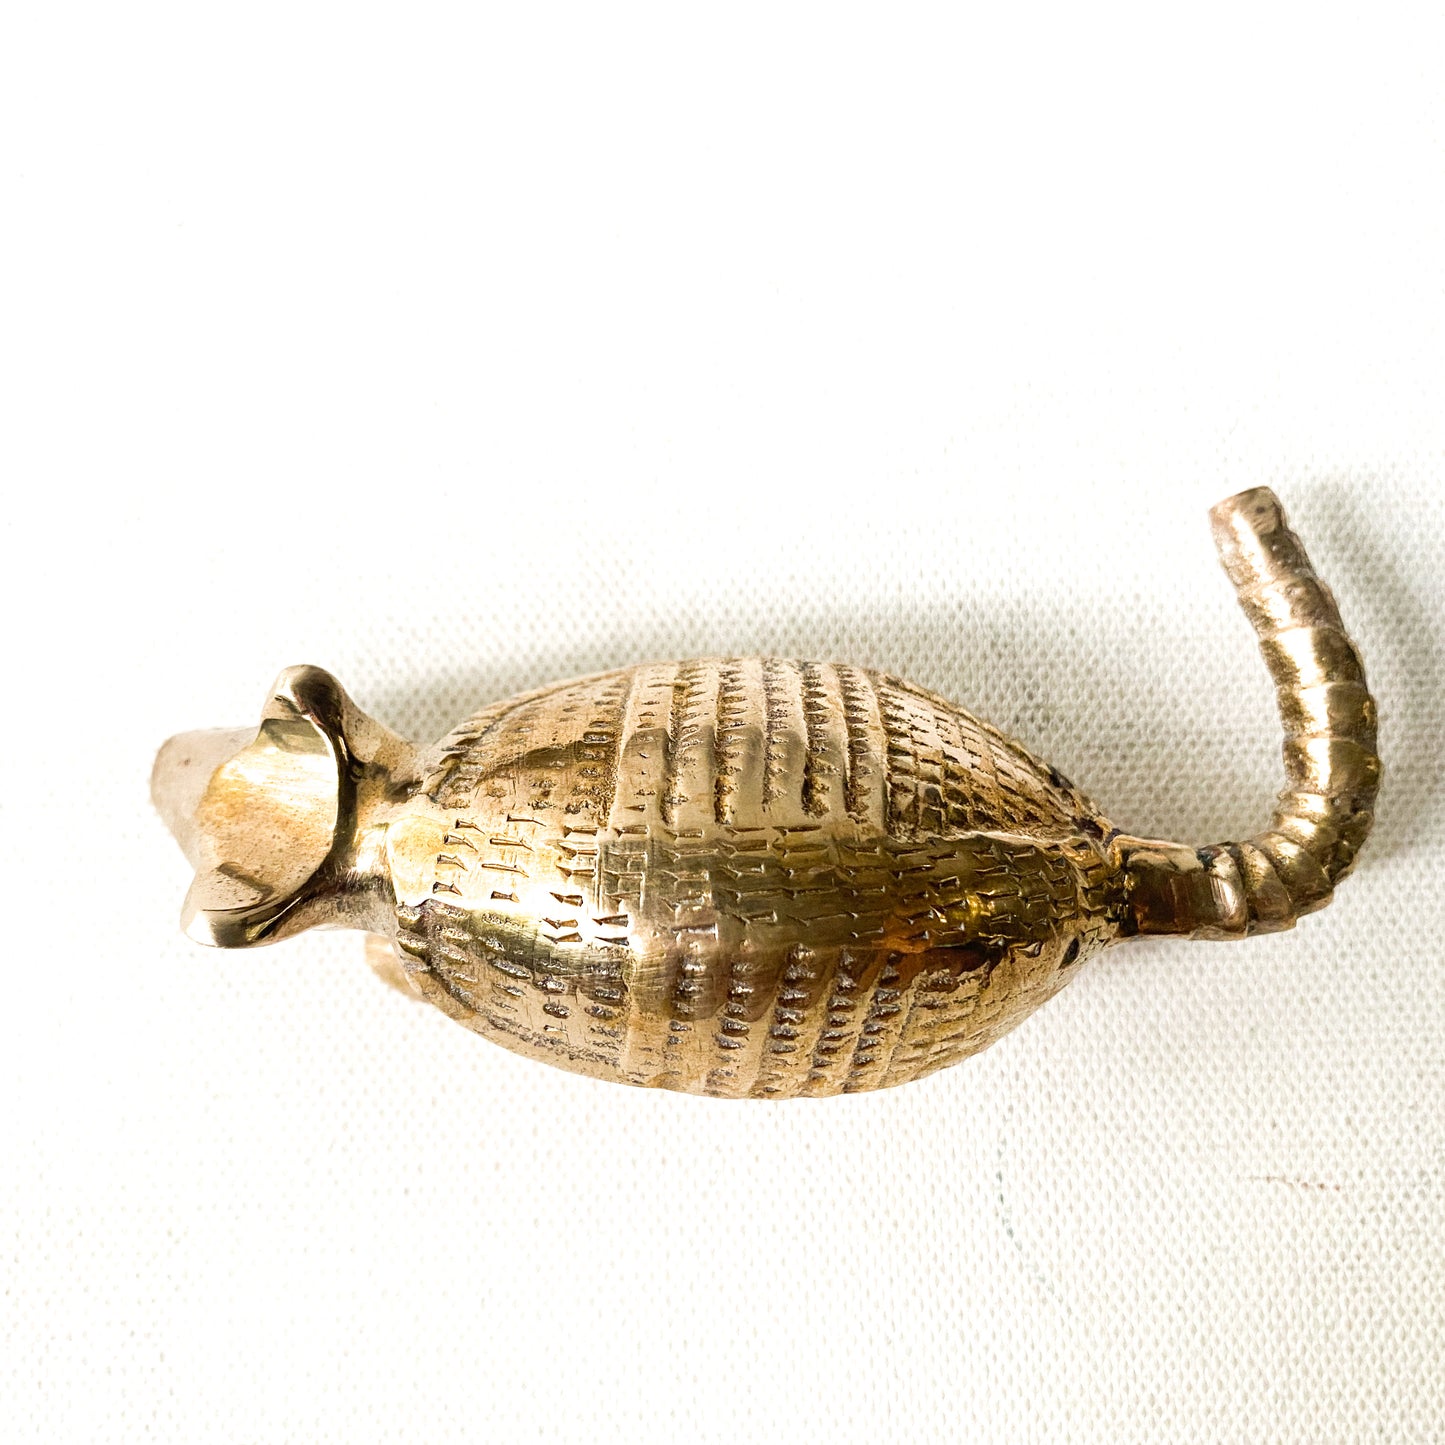 Small vintage brass armadillo figurine